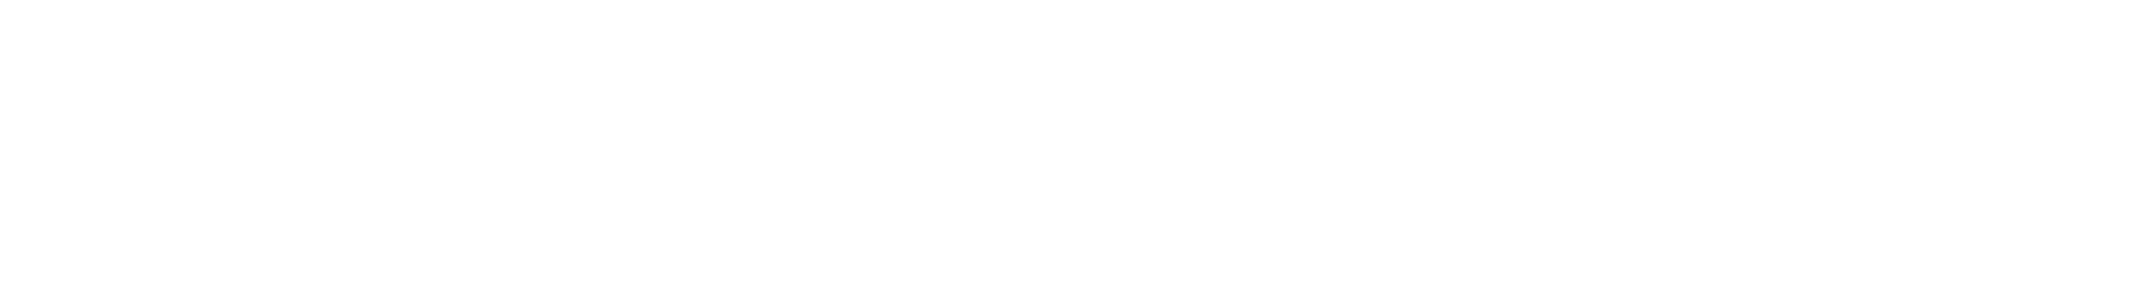 We are Community Data Platformer